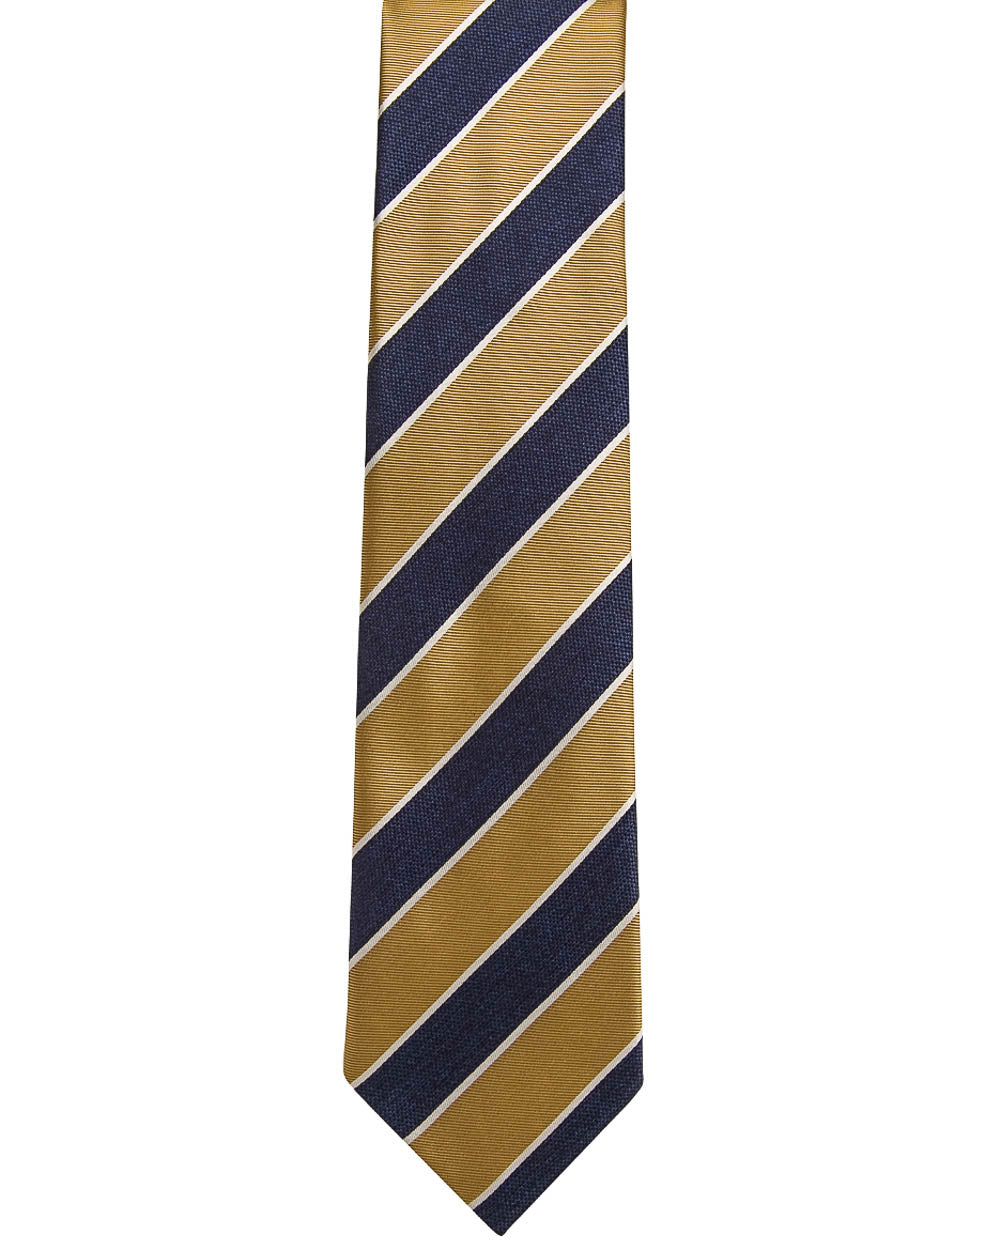 Navy Gold and White Stripe Tie